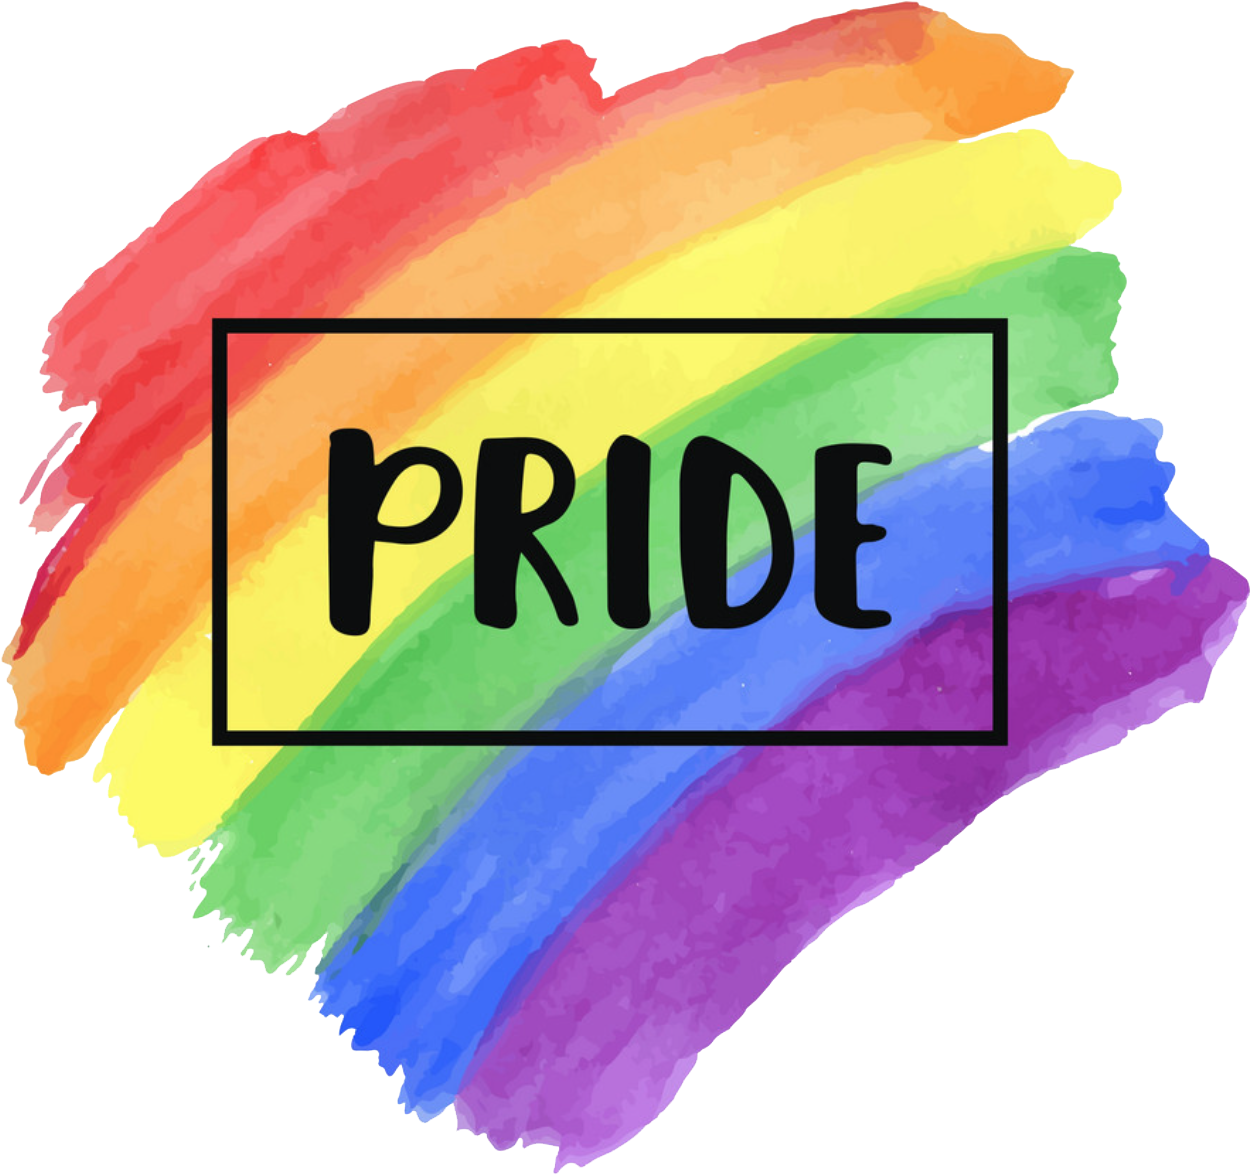 Download Pride Rainbow Brushstrokes | Wallpapers.com